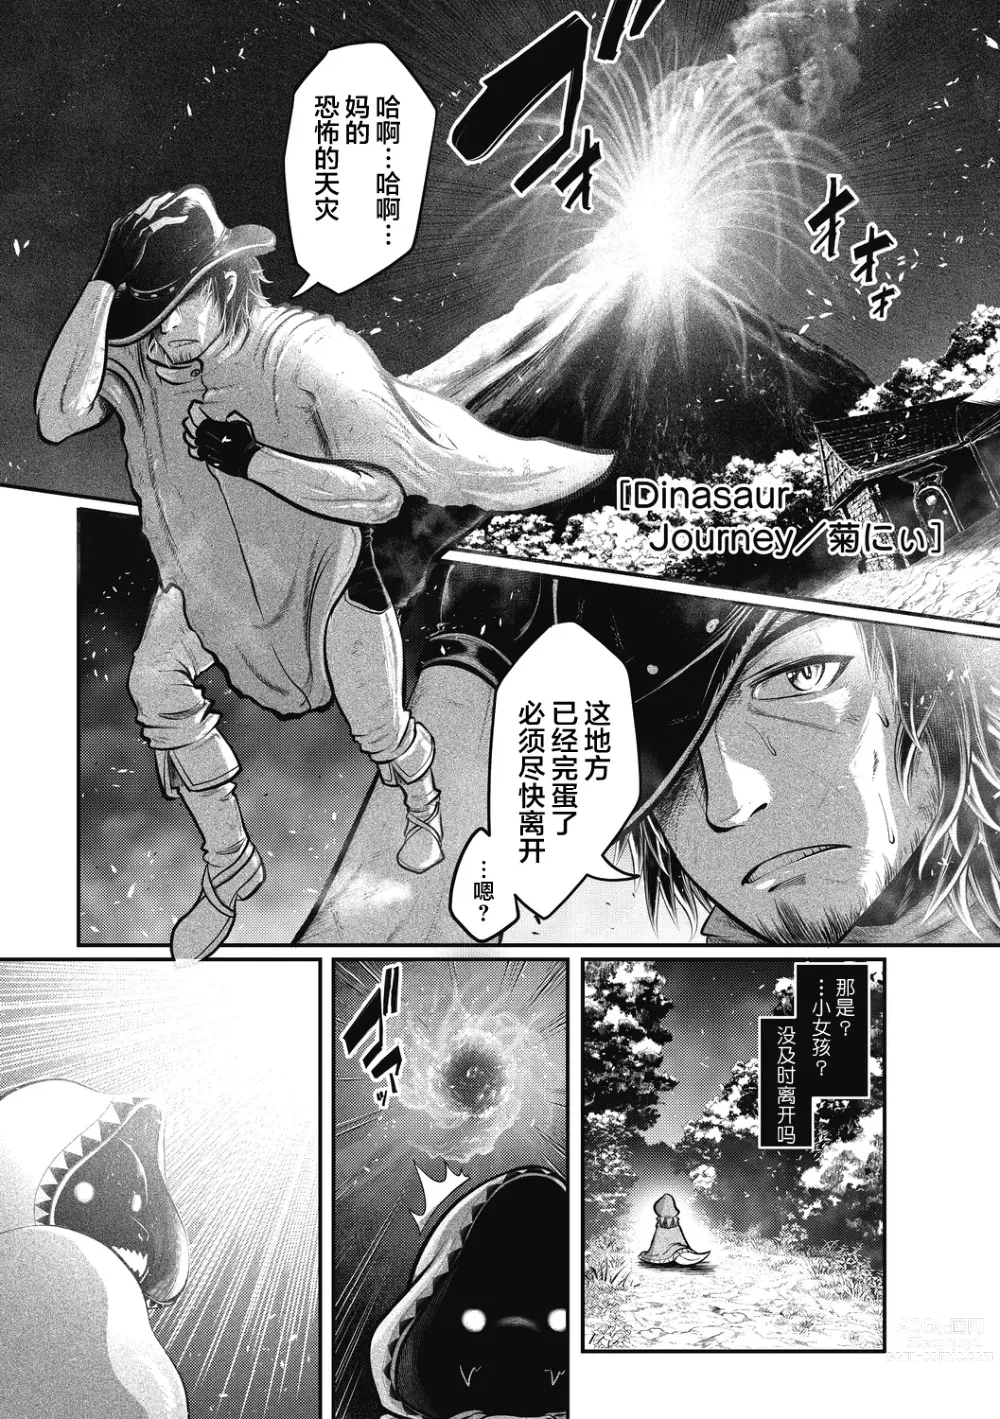 Page 2 of manga Dinosaur Journey